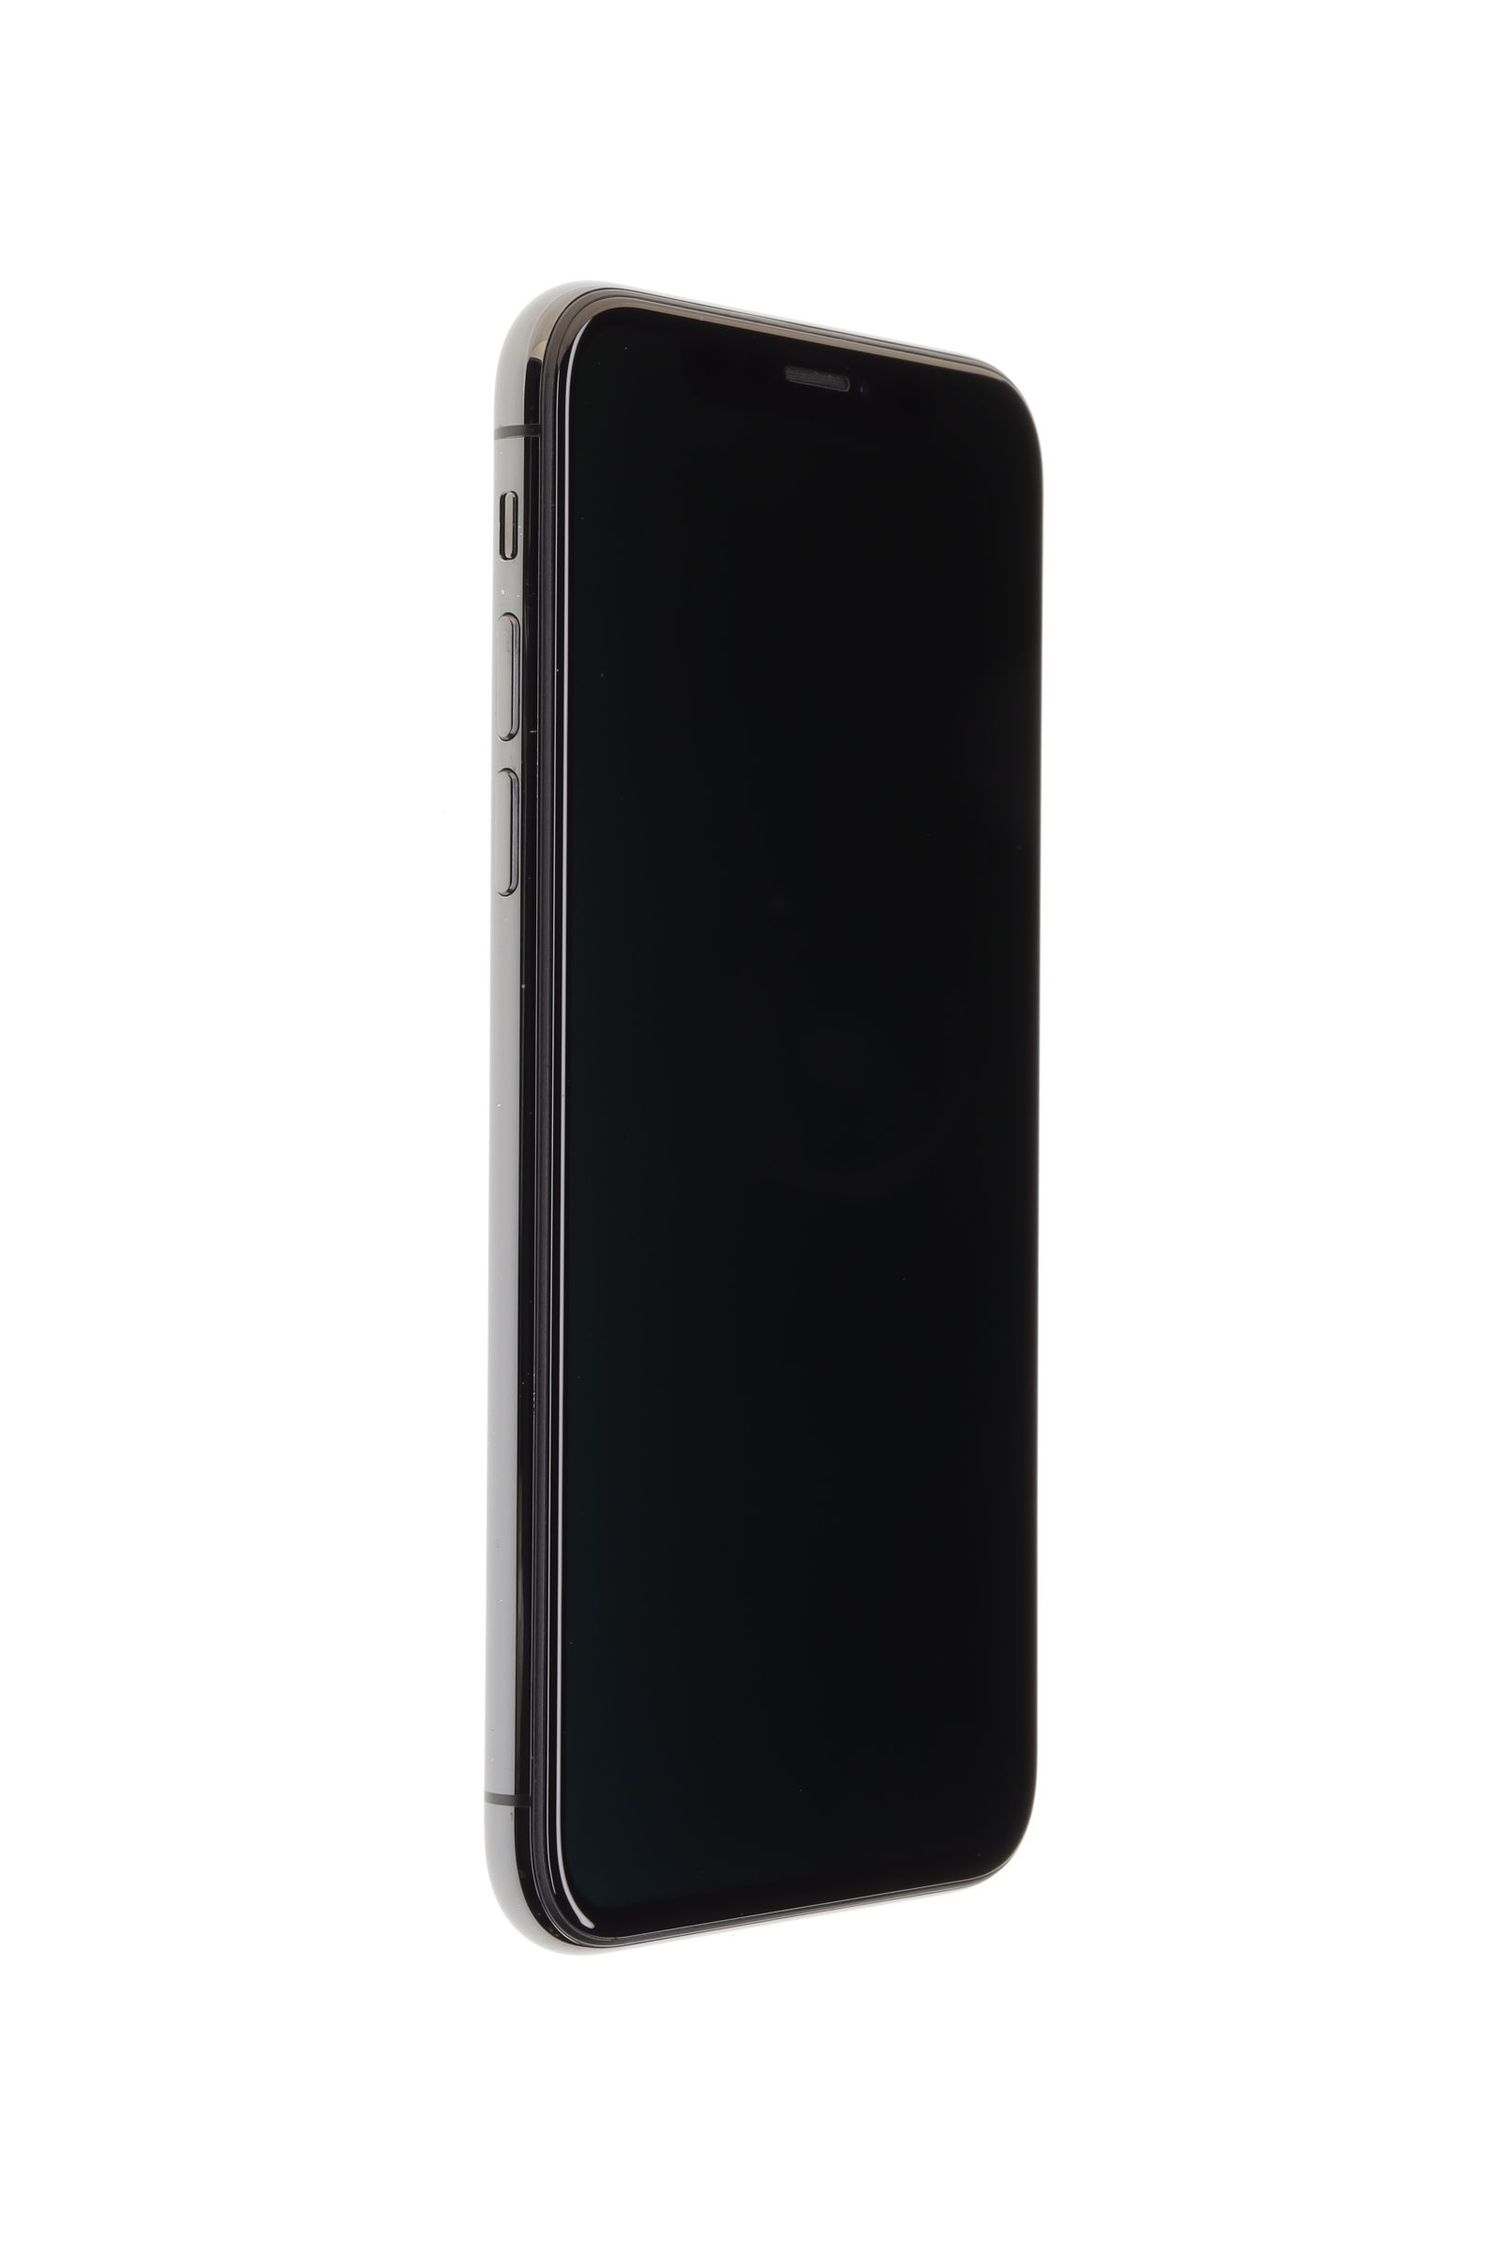 Mobiltelefon Apple iPhone X, Space Grey, 64 GB, Excelent